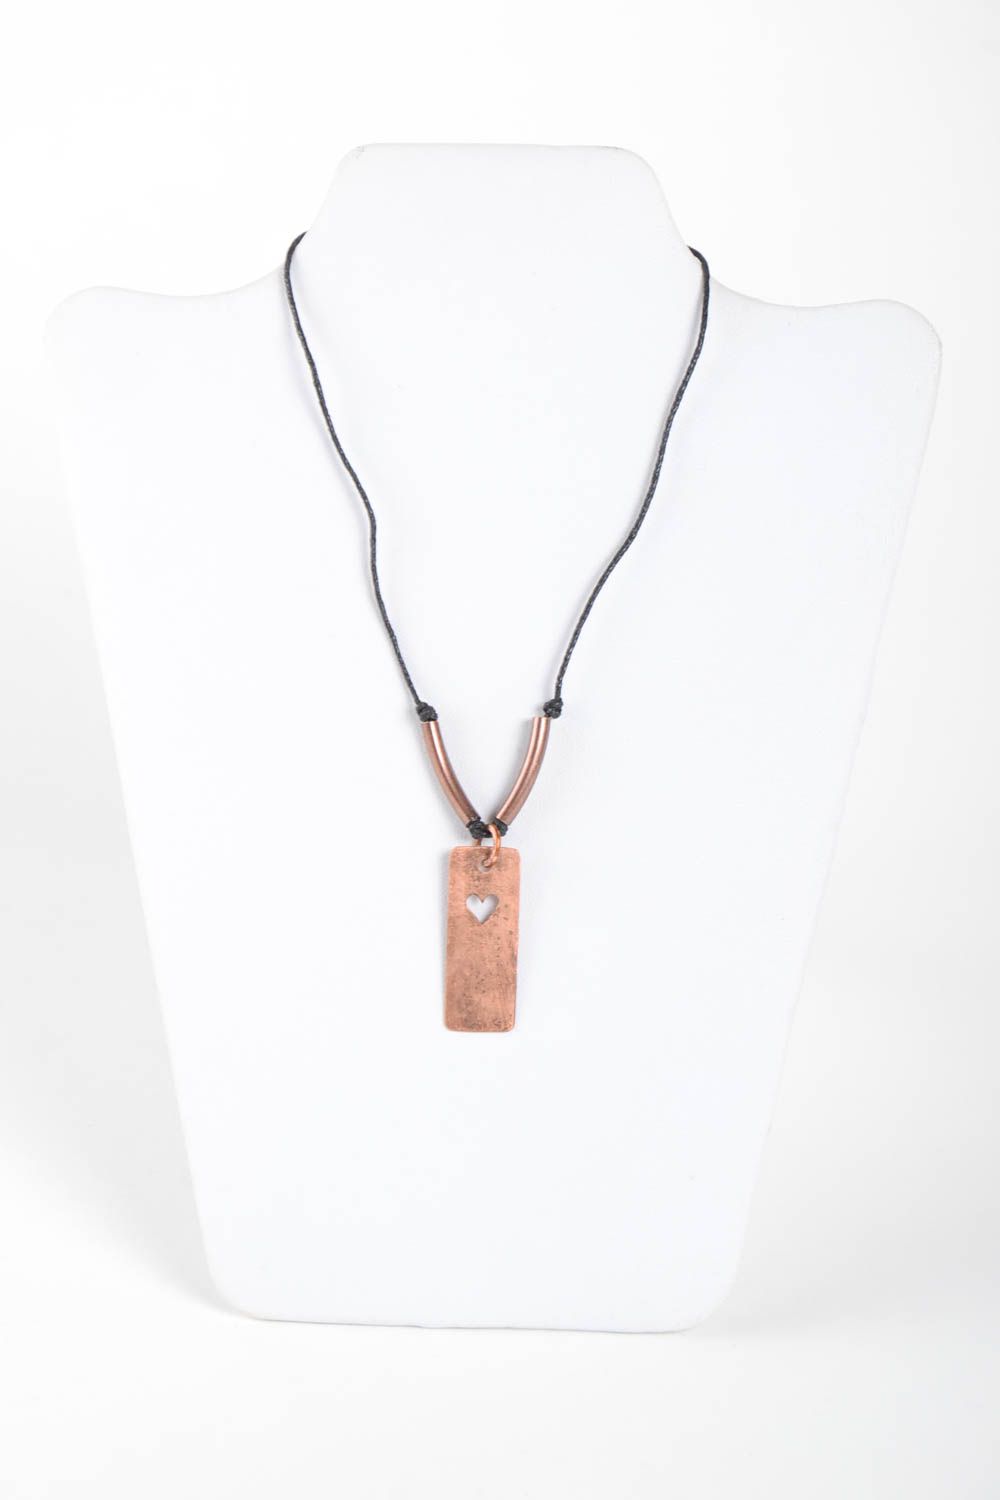 Handmade copper jewelry designer metal pendant copper accessory vintage jewelry photo 2